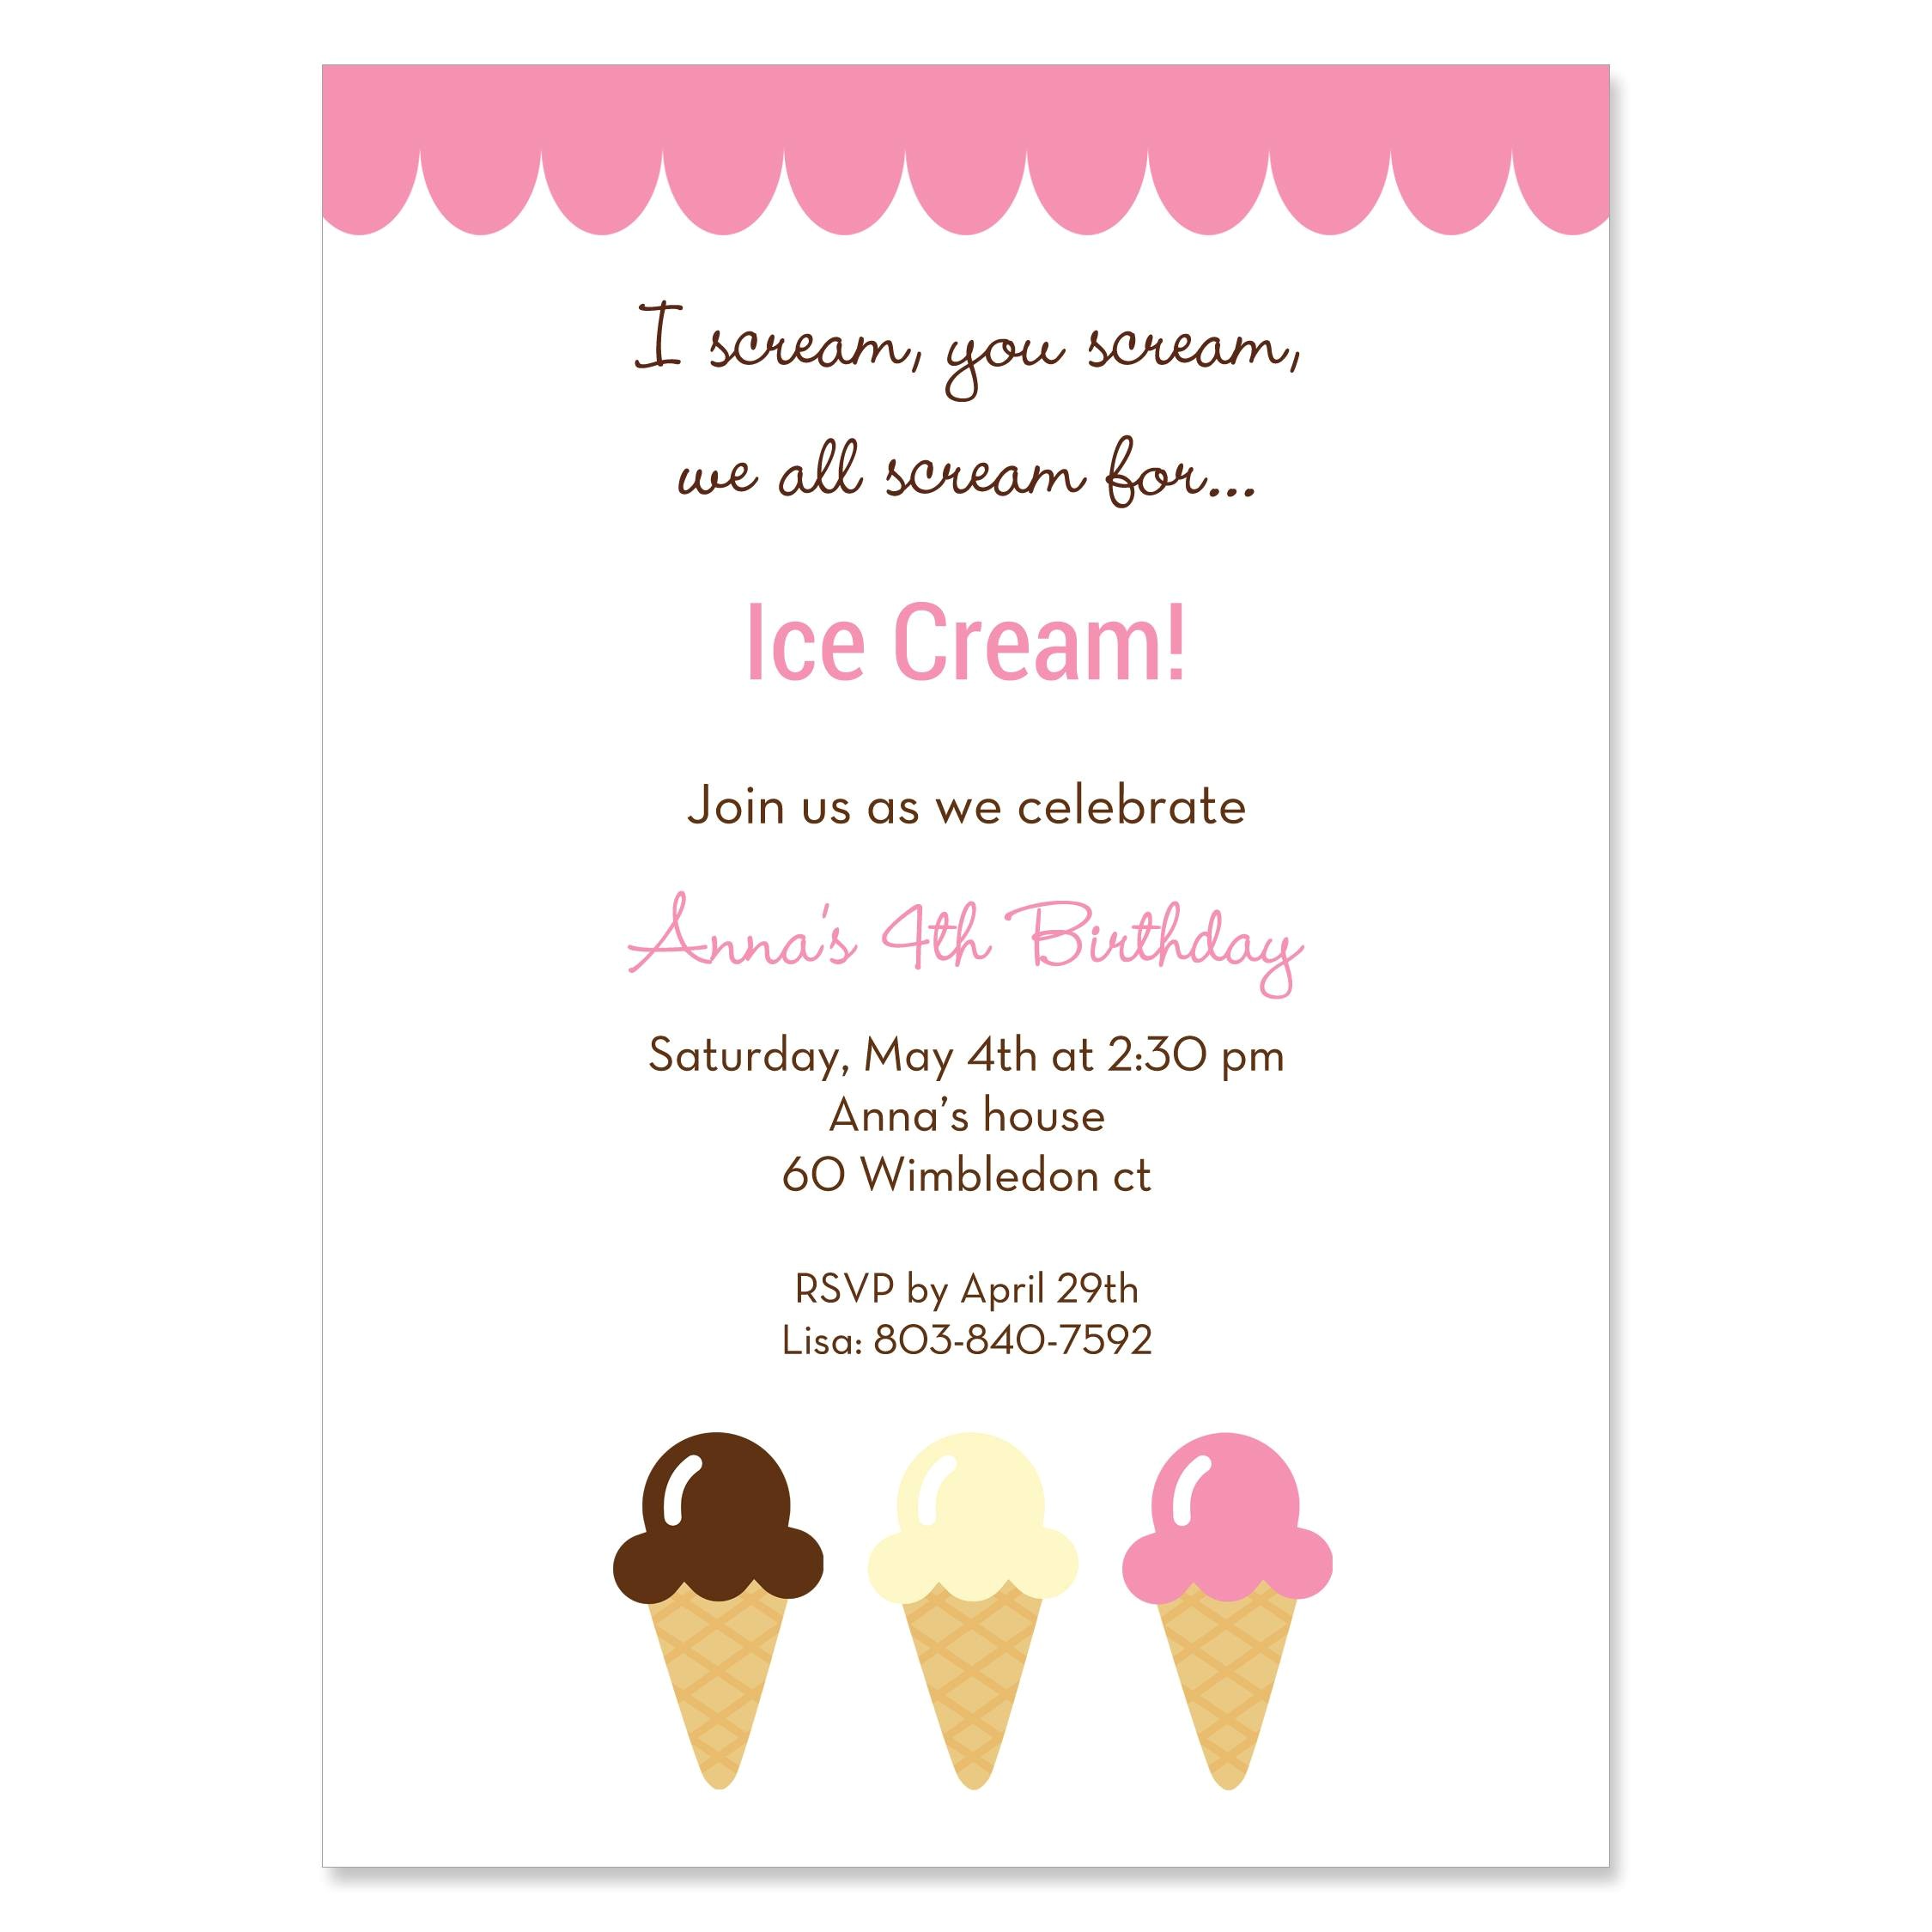 ice cream party invitations